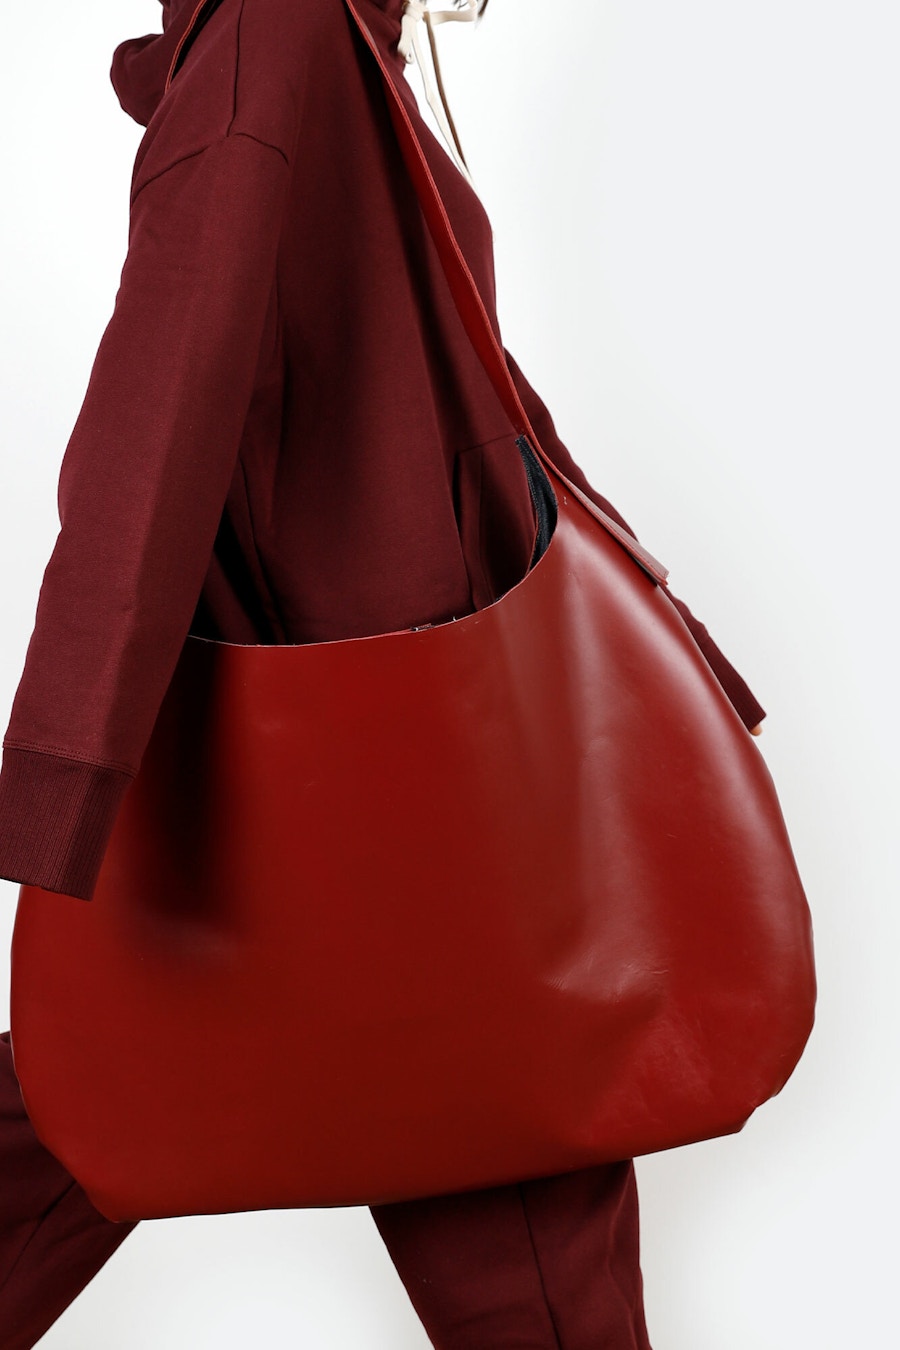 Big Red Handbag Walking